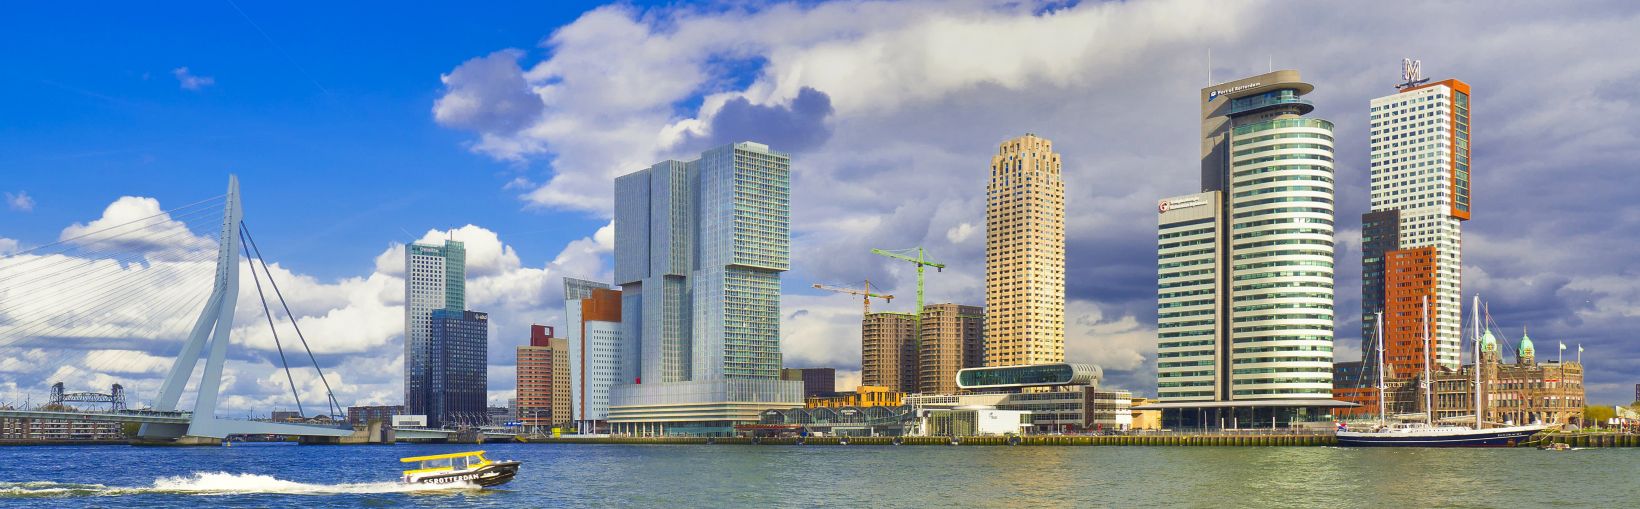 Nieuwe Maas River, Architecture moderne, Rotterdam, Hollande, Pays-Bas, Europe